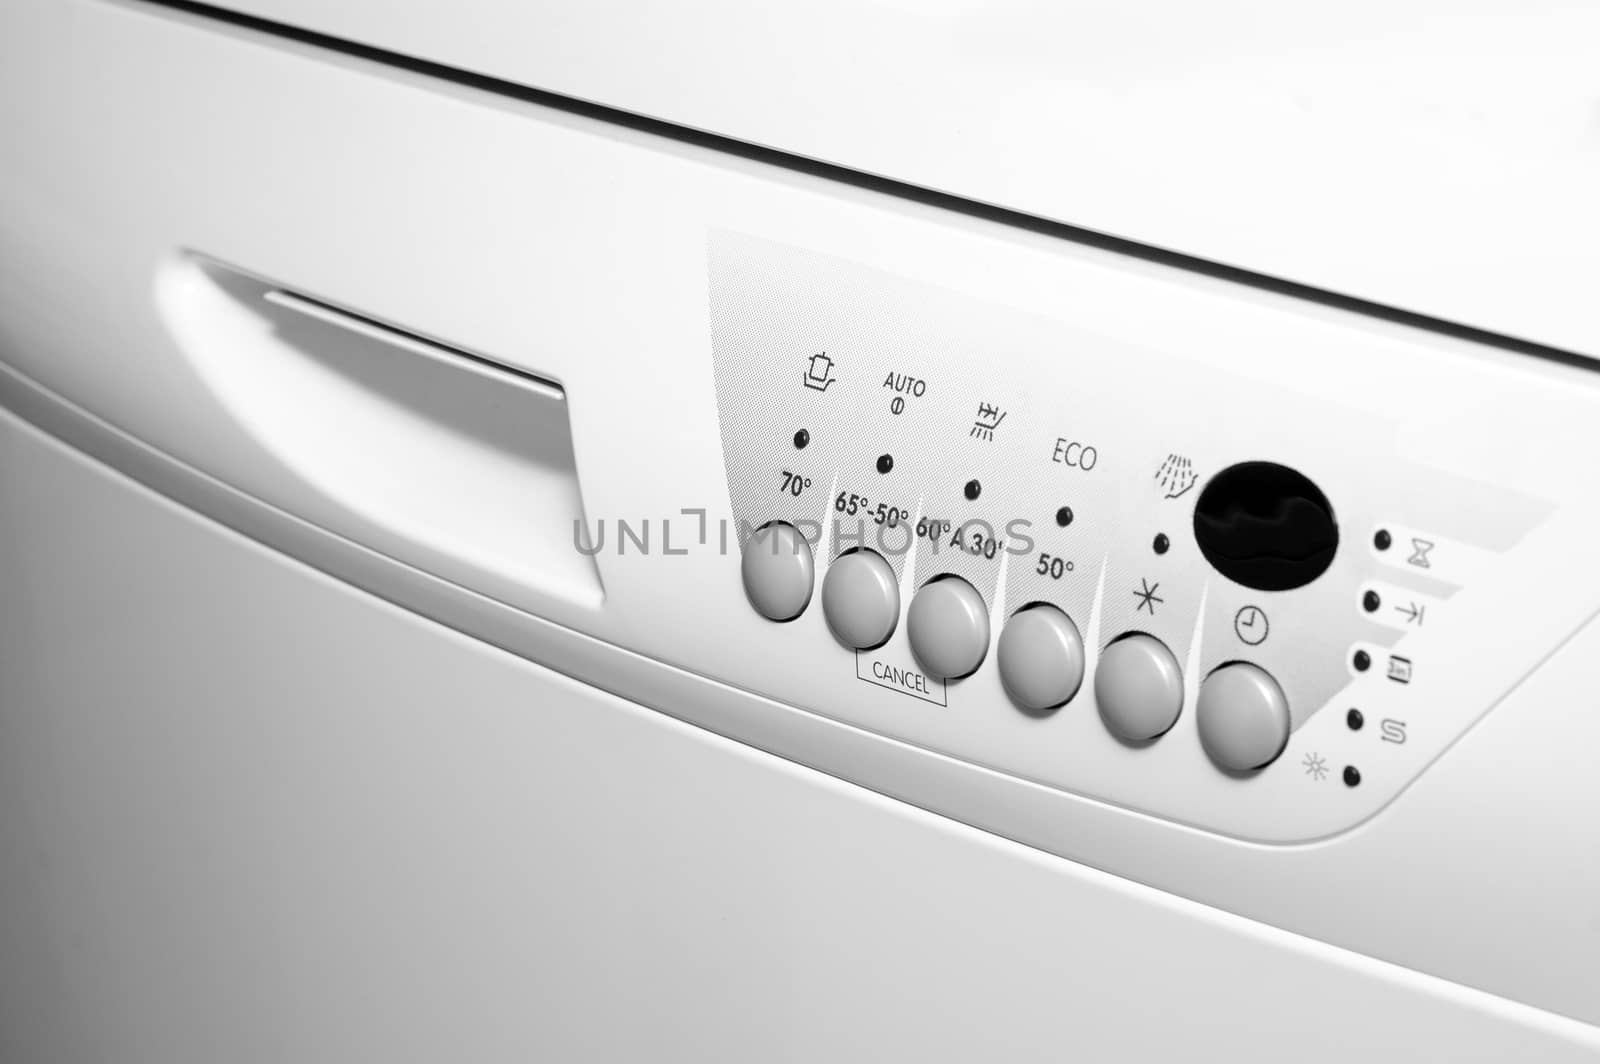 washing machine control panel closeup, selective focus